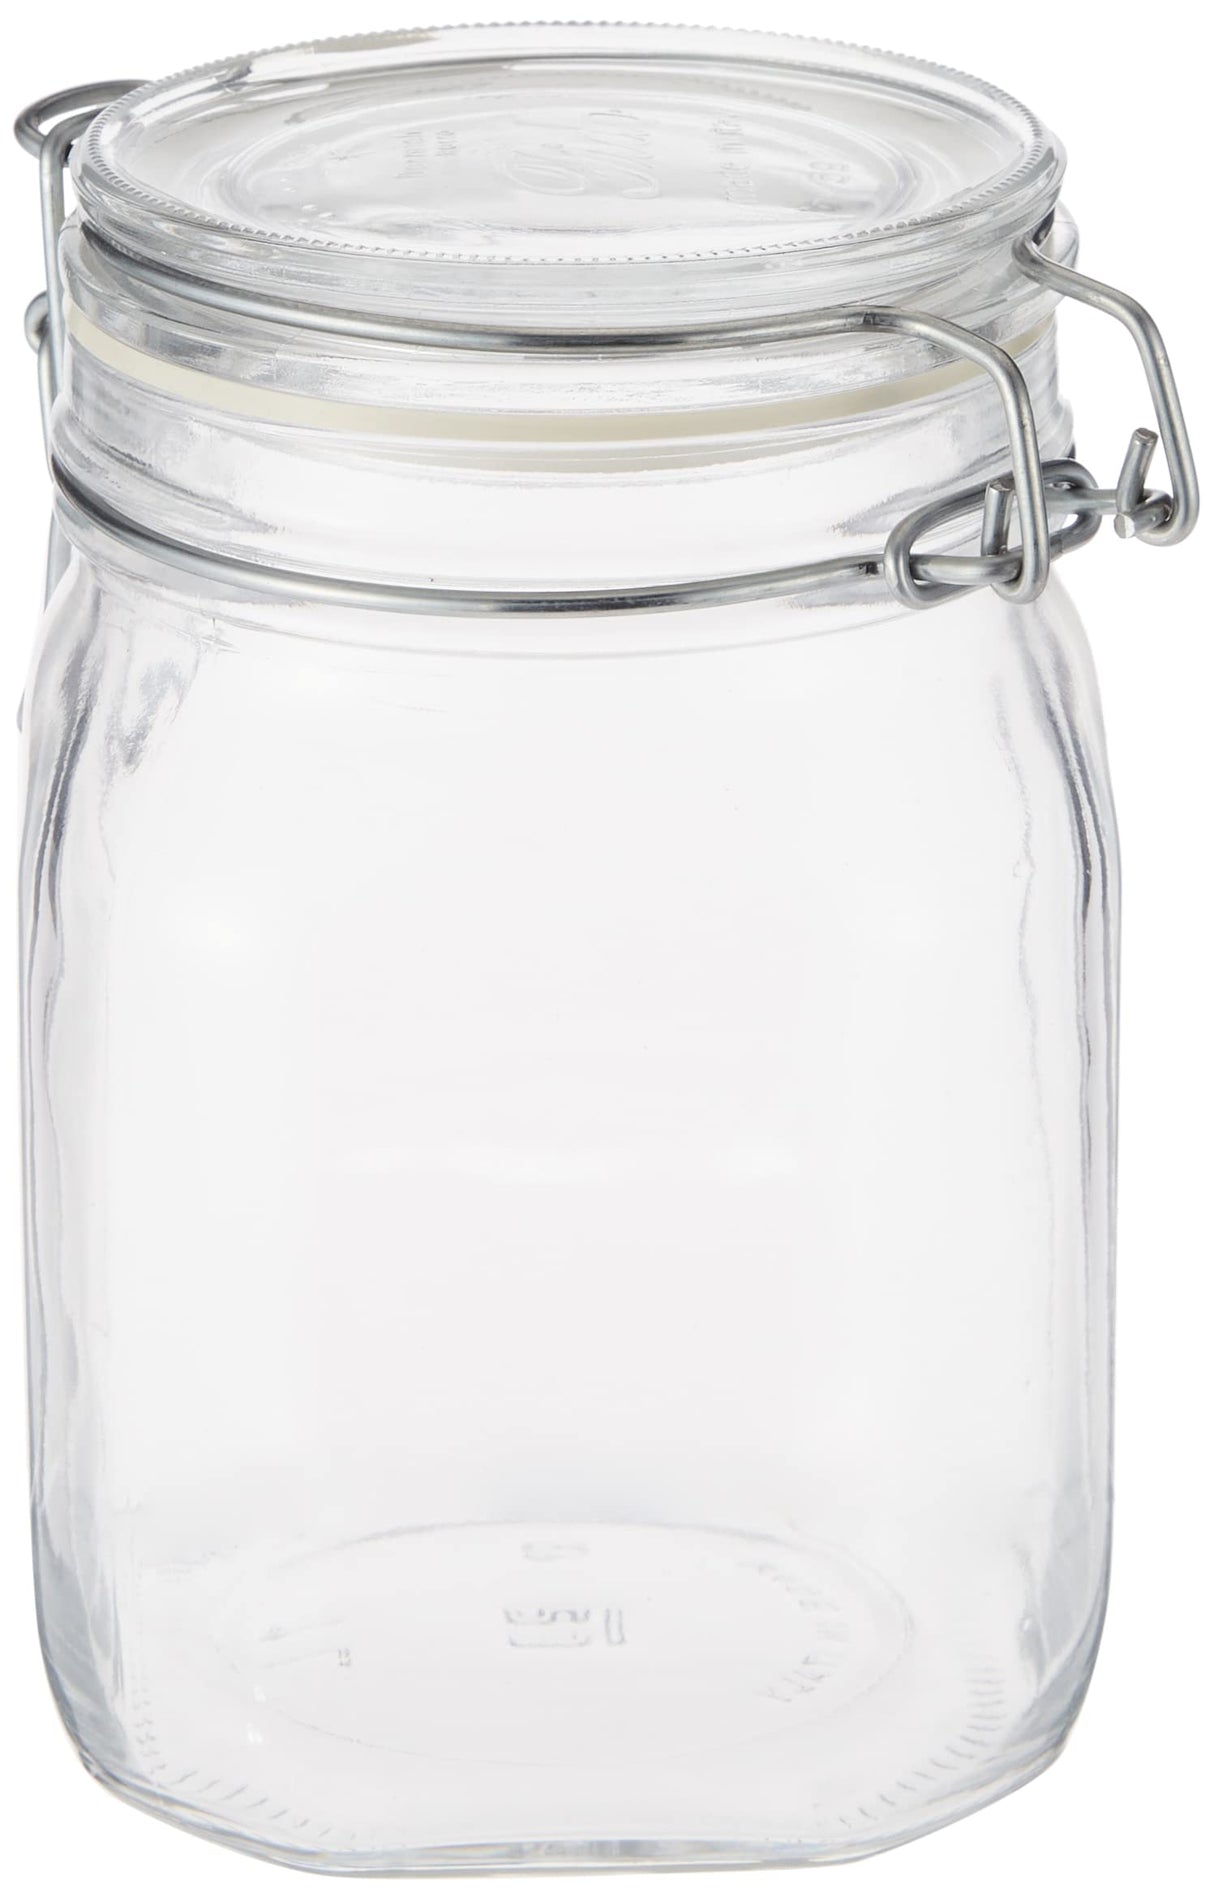 Bormioli Rocco Fido Storage Jar-Wire Bail-1 L-1 Pack, 1 liter, Clear